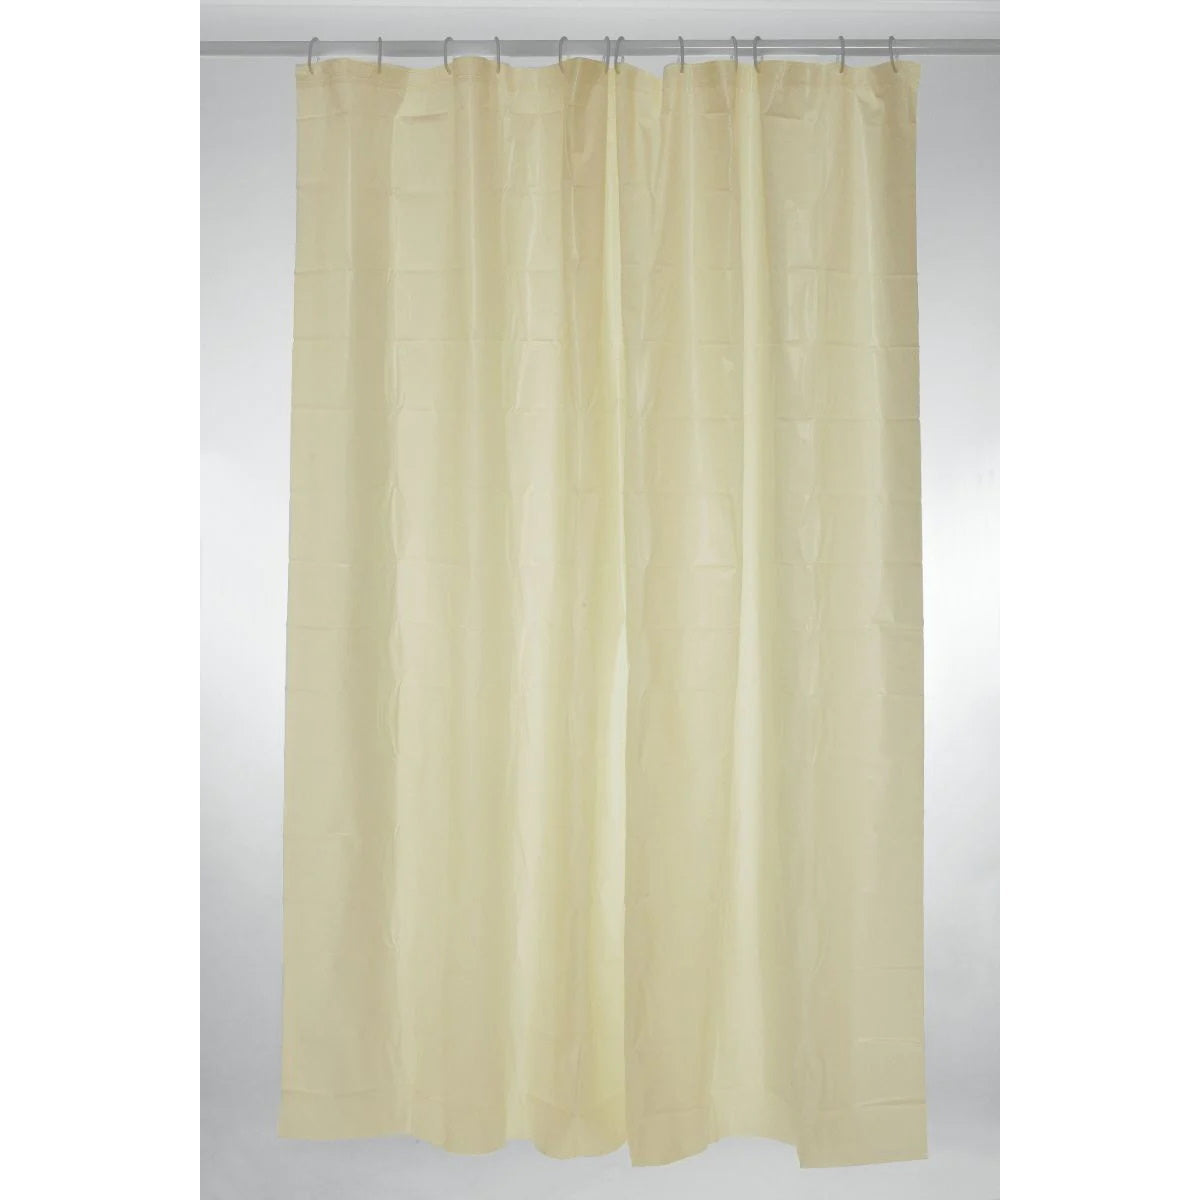 Blue Canyon SC205CR Peva Shower Curtain 180x180cm - Cream - Premium Shower Curtains from Blue Canyon - Just $6.95! Shop now at W Hurst & Son (IW) Ltd